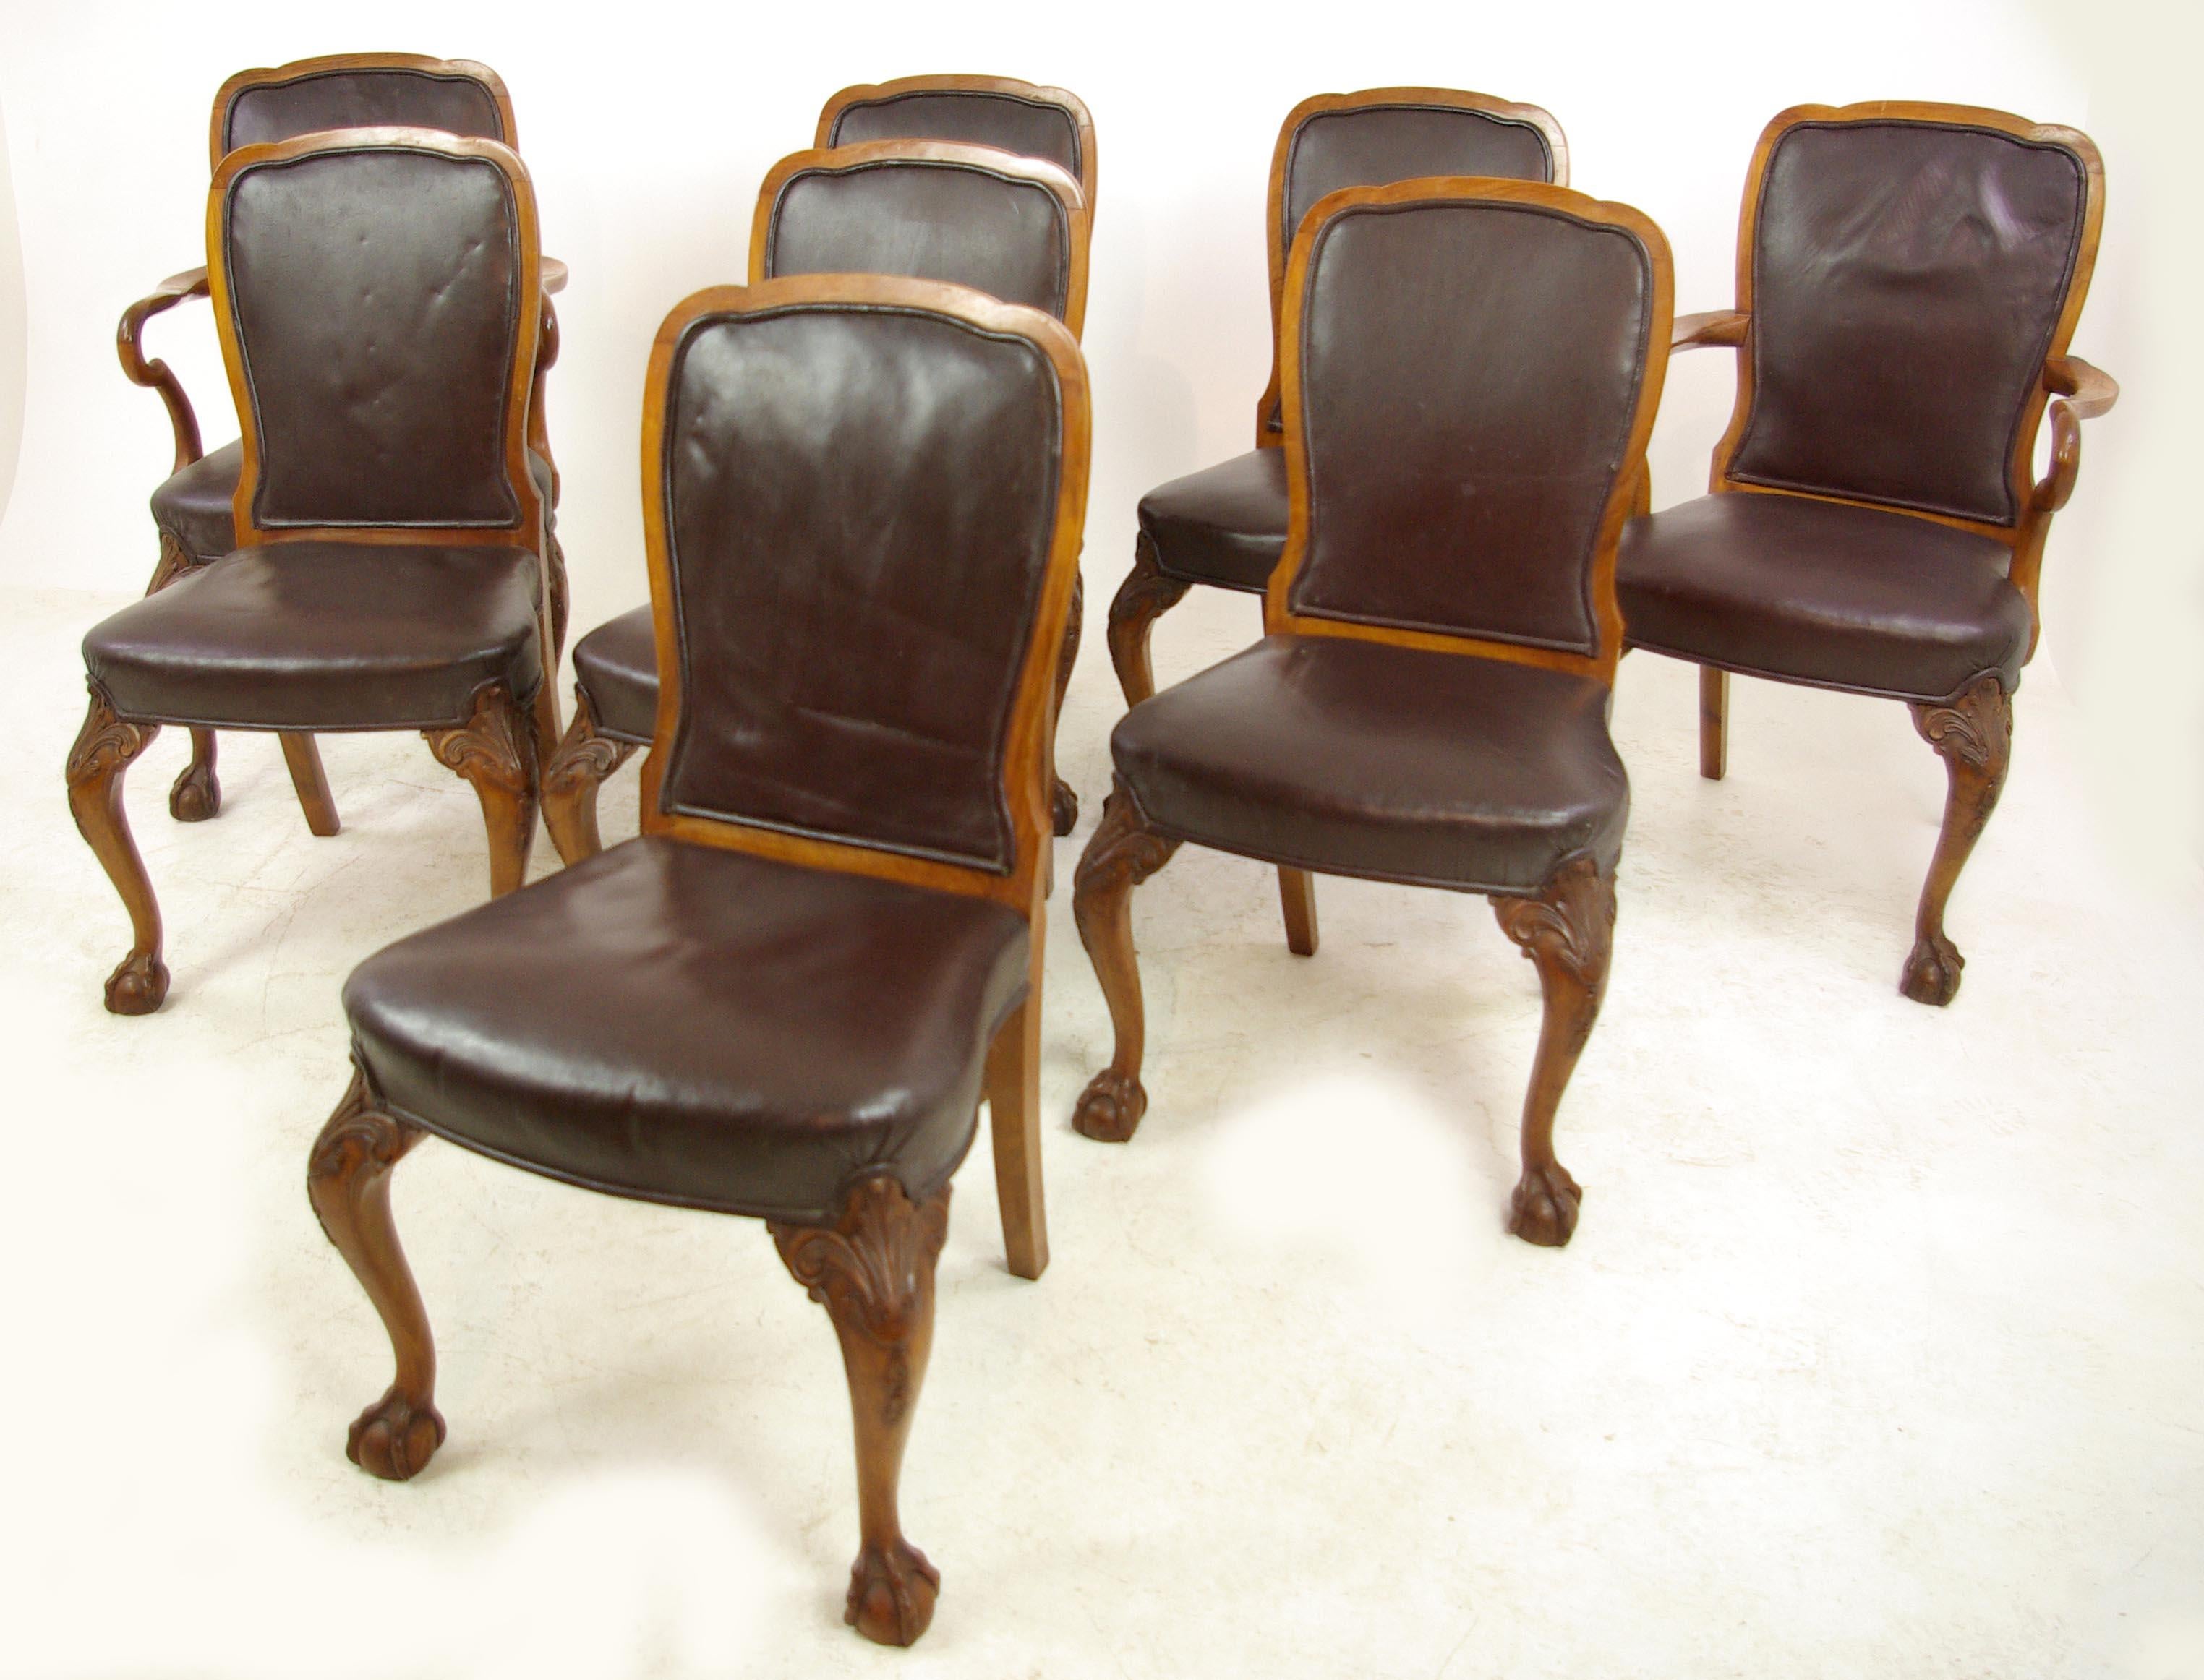 Scottish Antique Dining Chairs, Walnut, Leather Seats, Scotland 1930, B1348